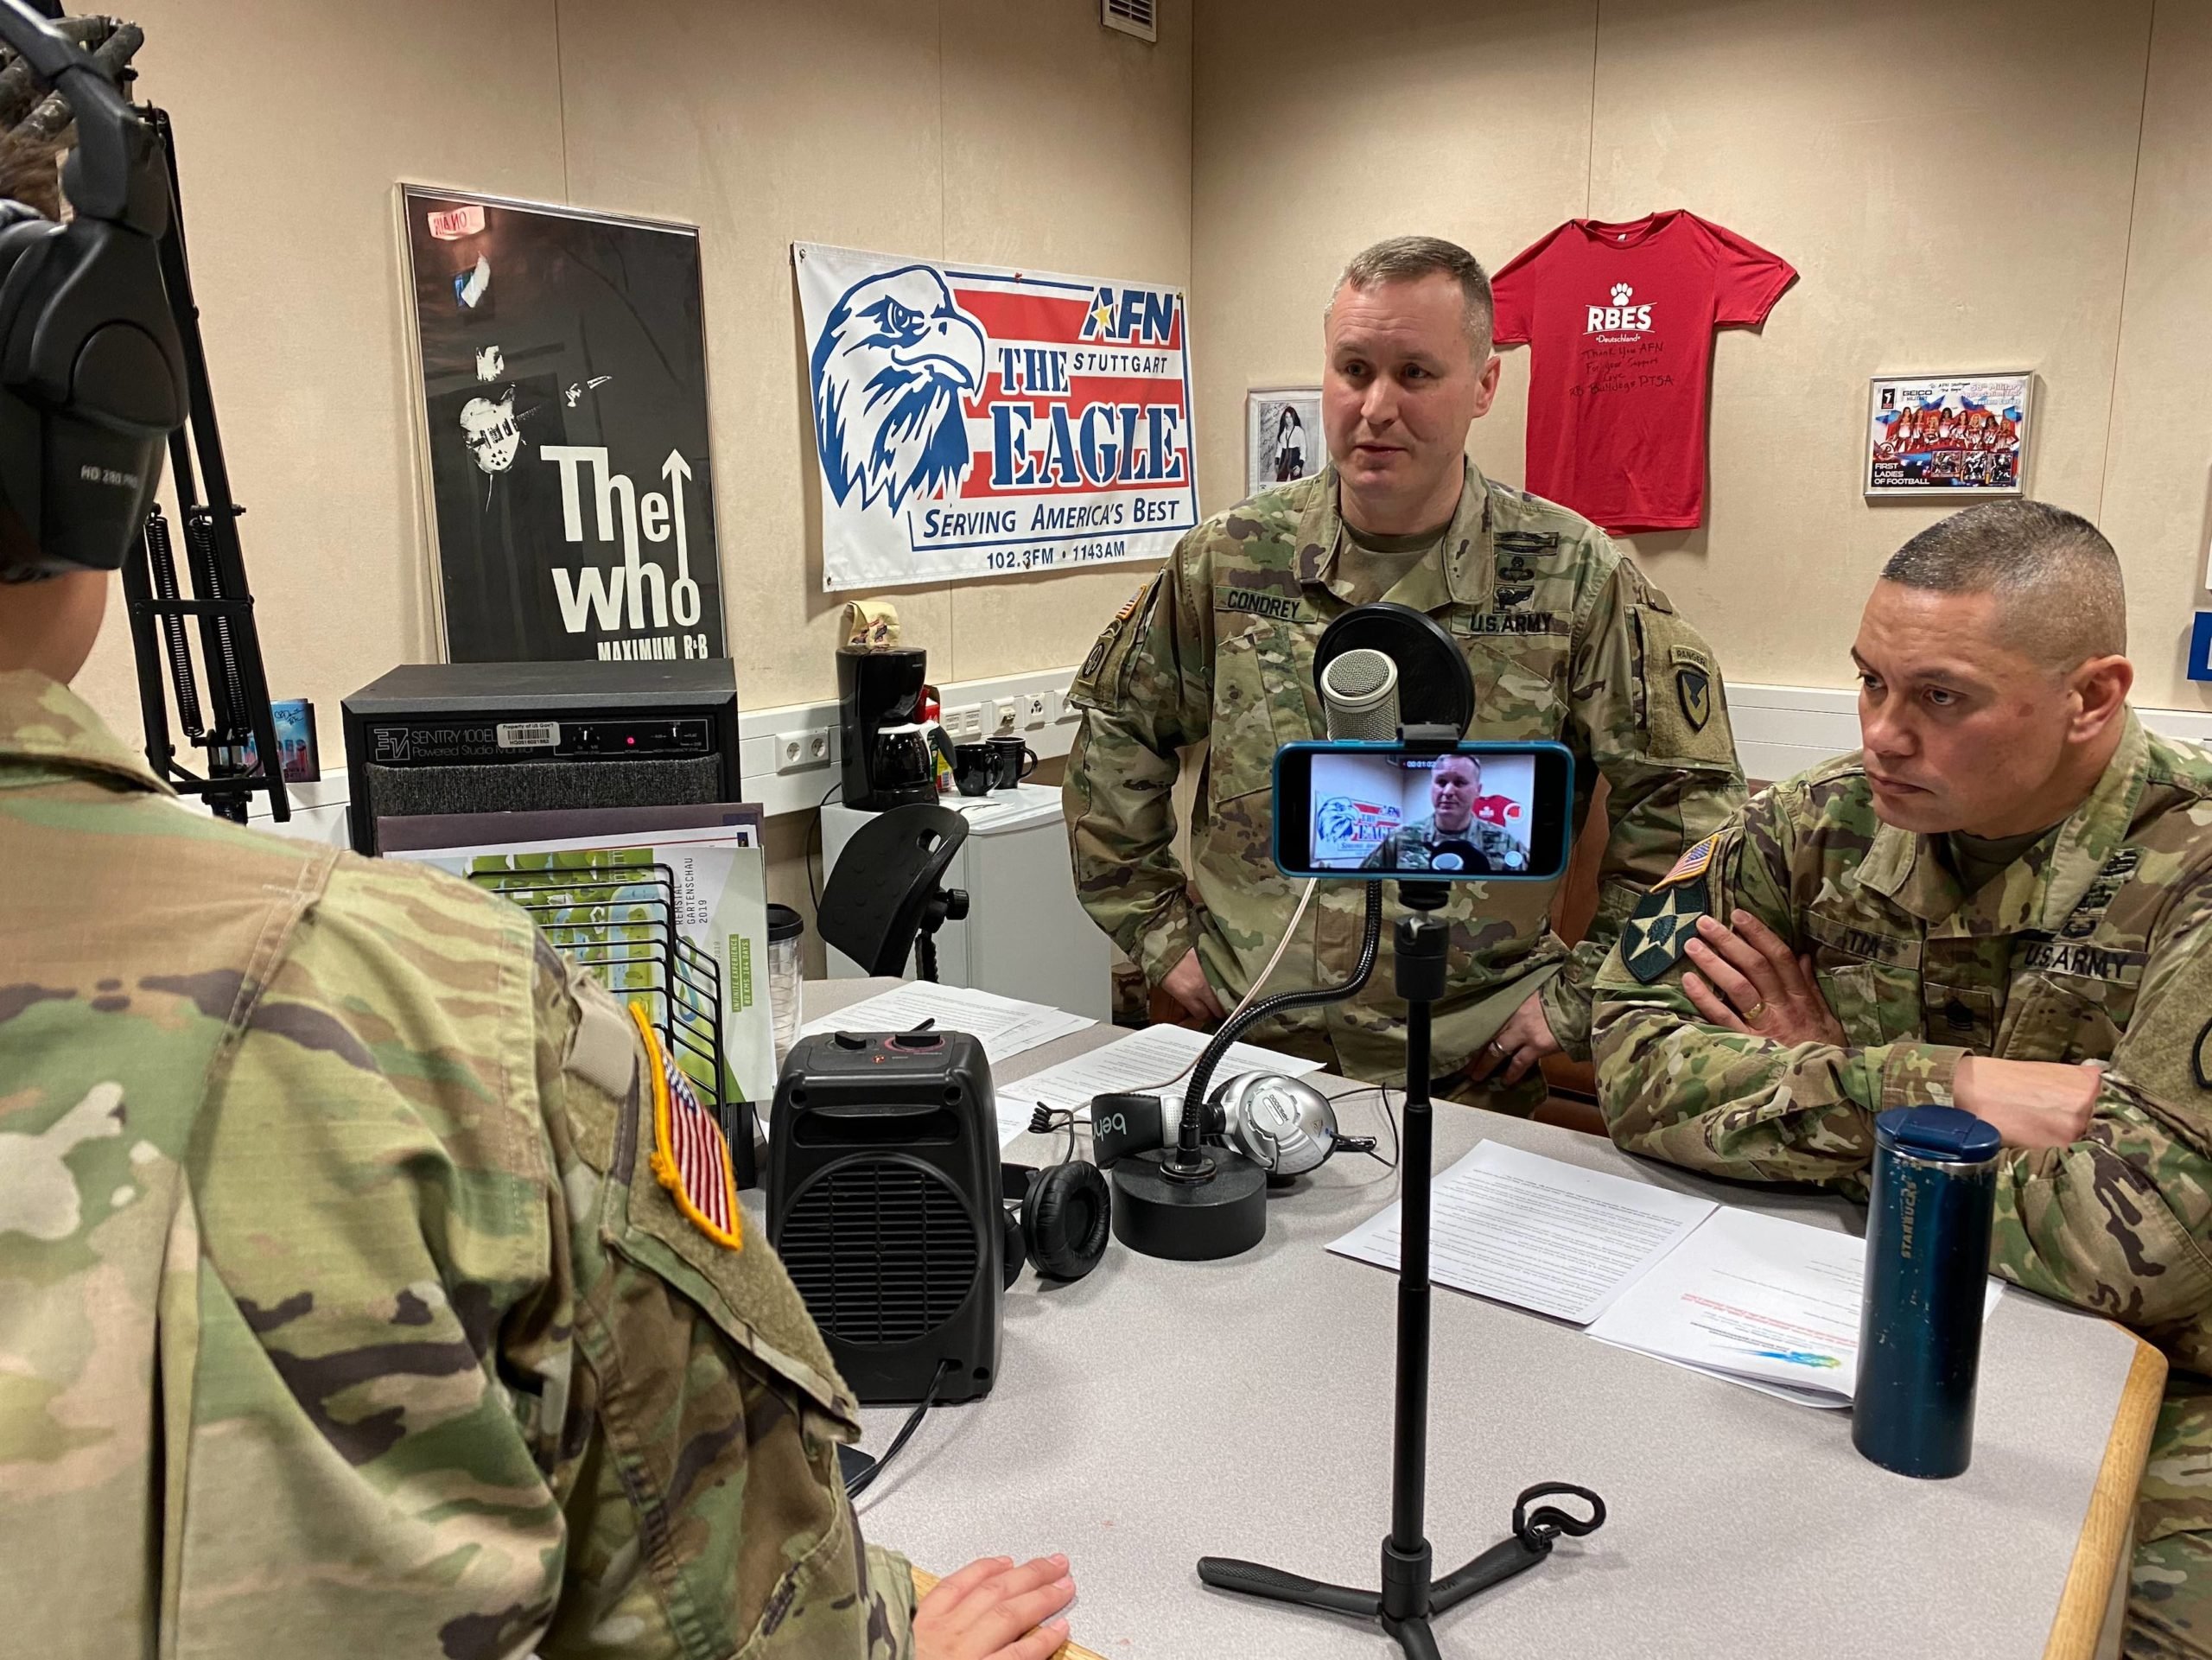 Soldiers interviewed on AFN